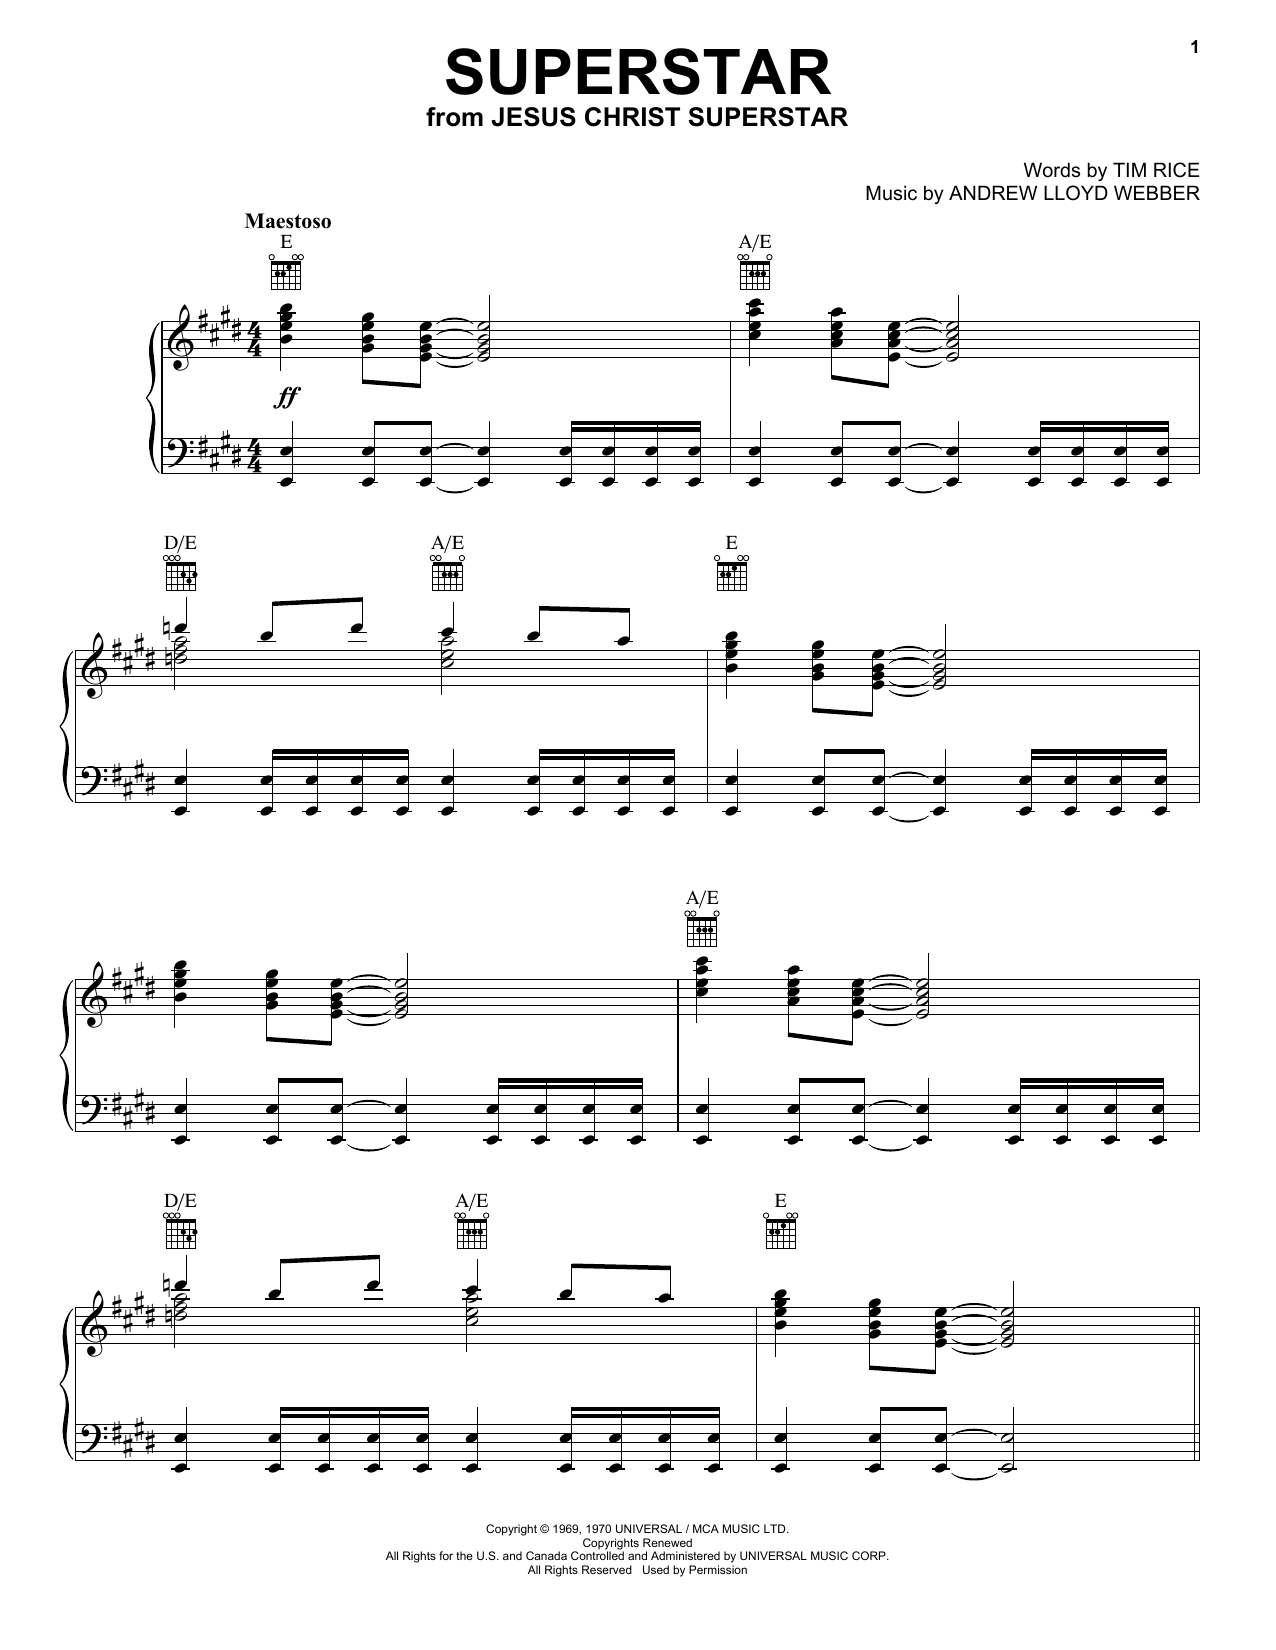 Andrew Lloyd Webber Superstar (from Jesus Christ Superstar) Sheet Music Notes & Chords for Trumpet - Download or Print PDF